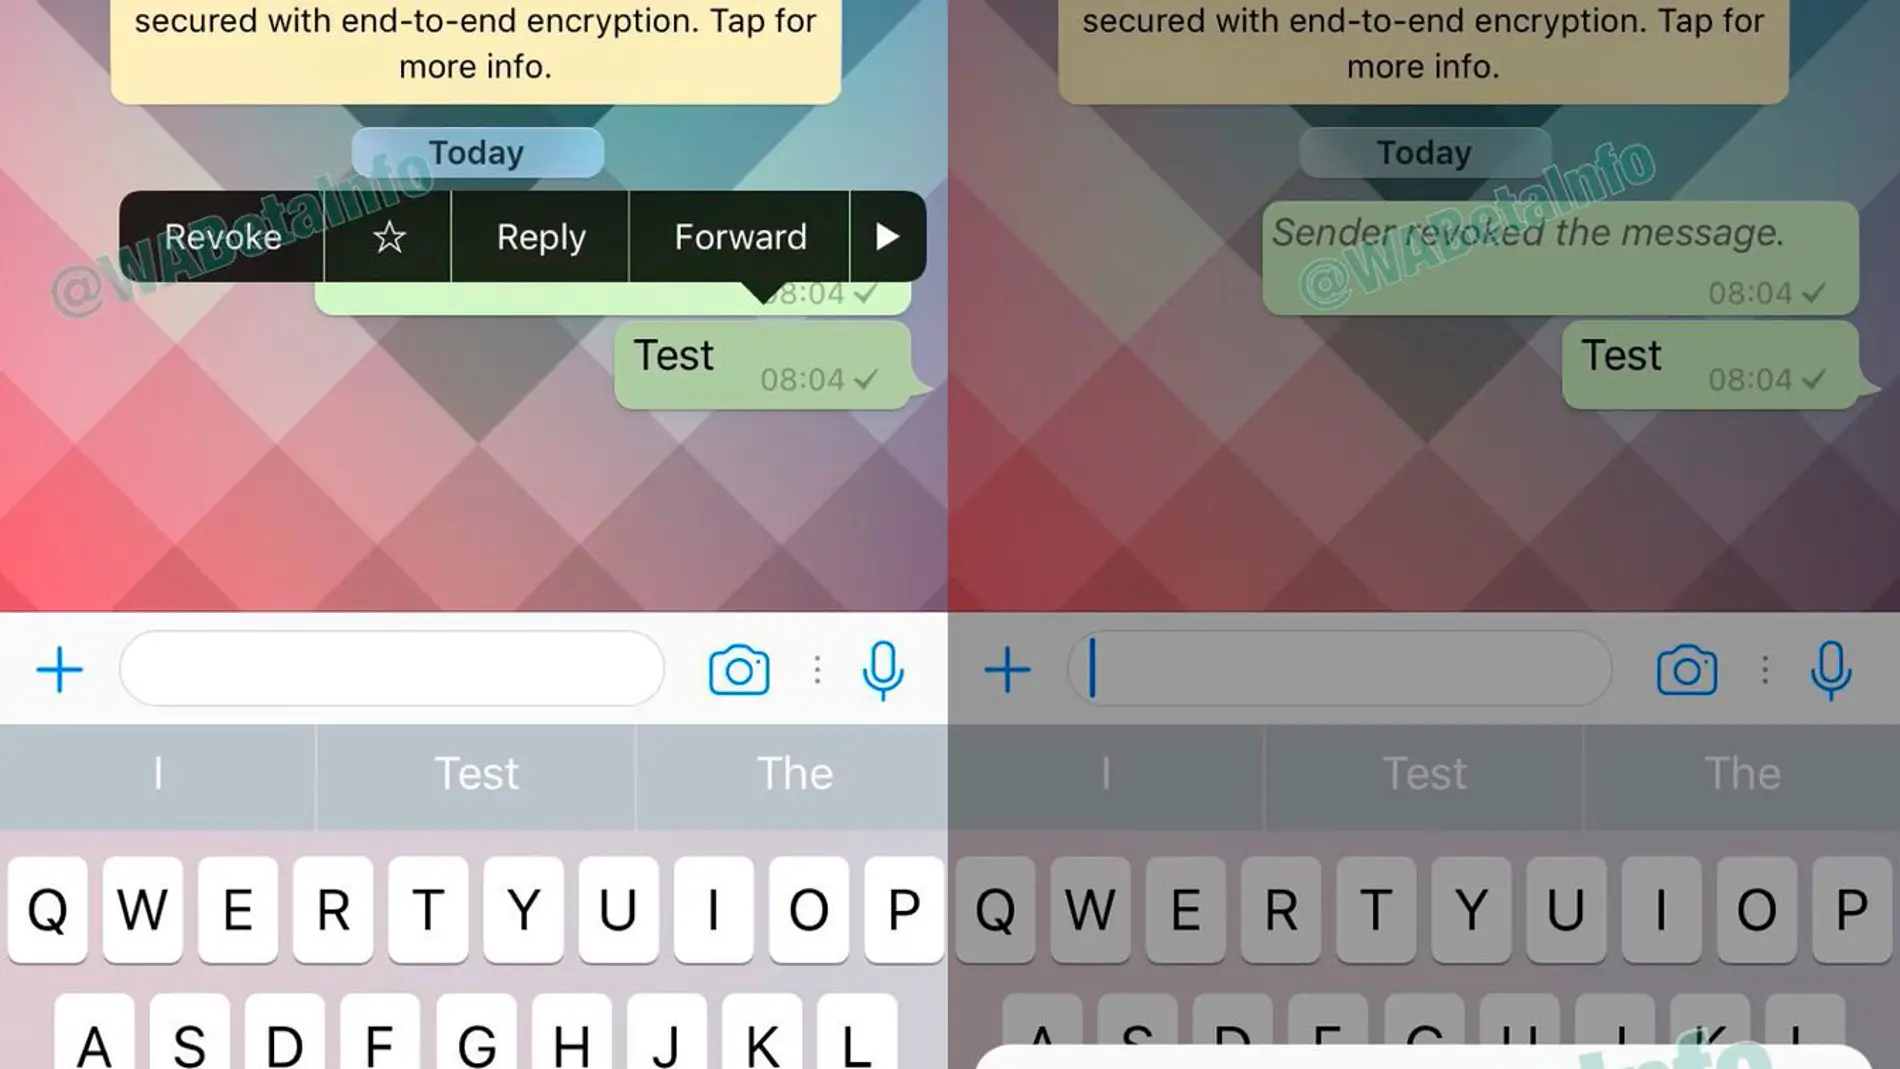 Whatsapp ya permite borrar mensajes